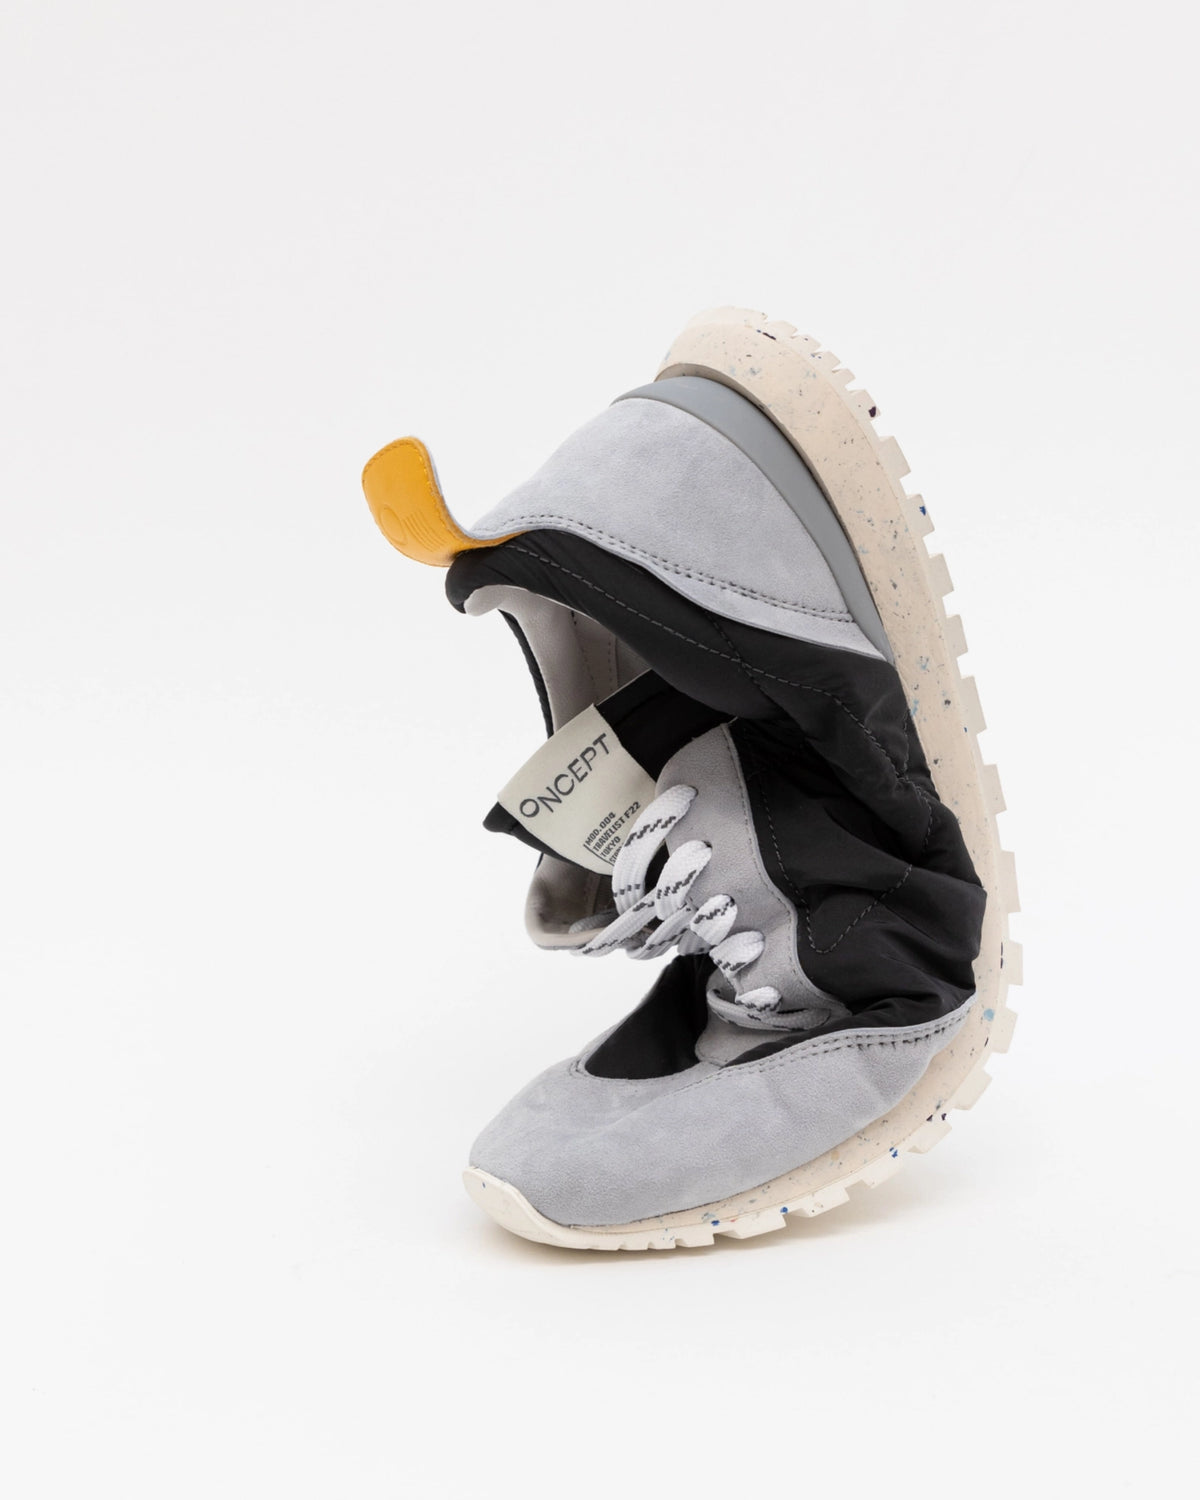 oncept tokyo retro trainer sneakers in storm grey